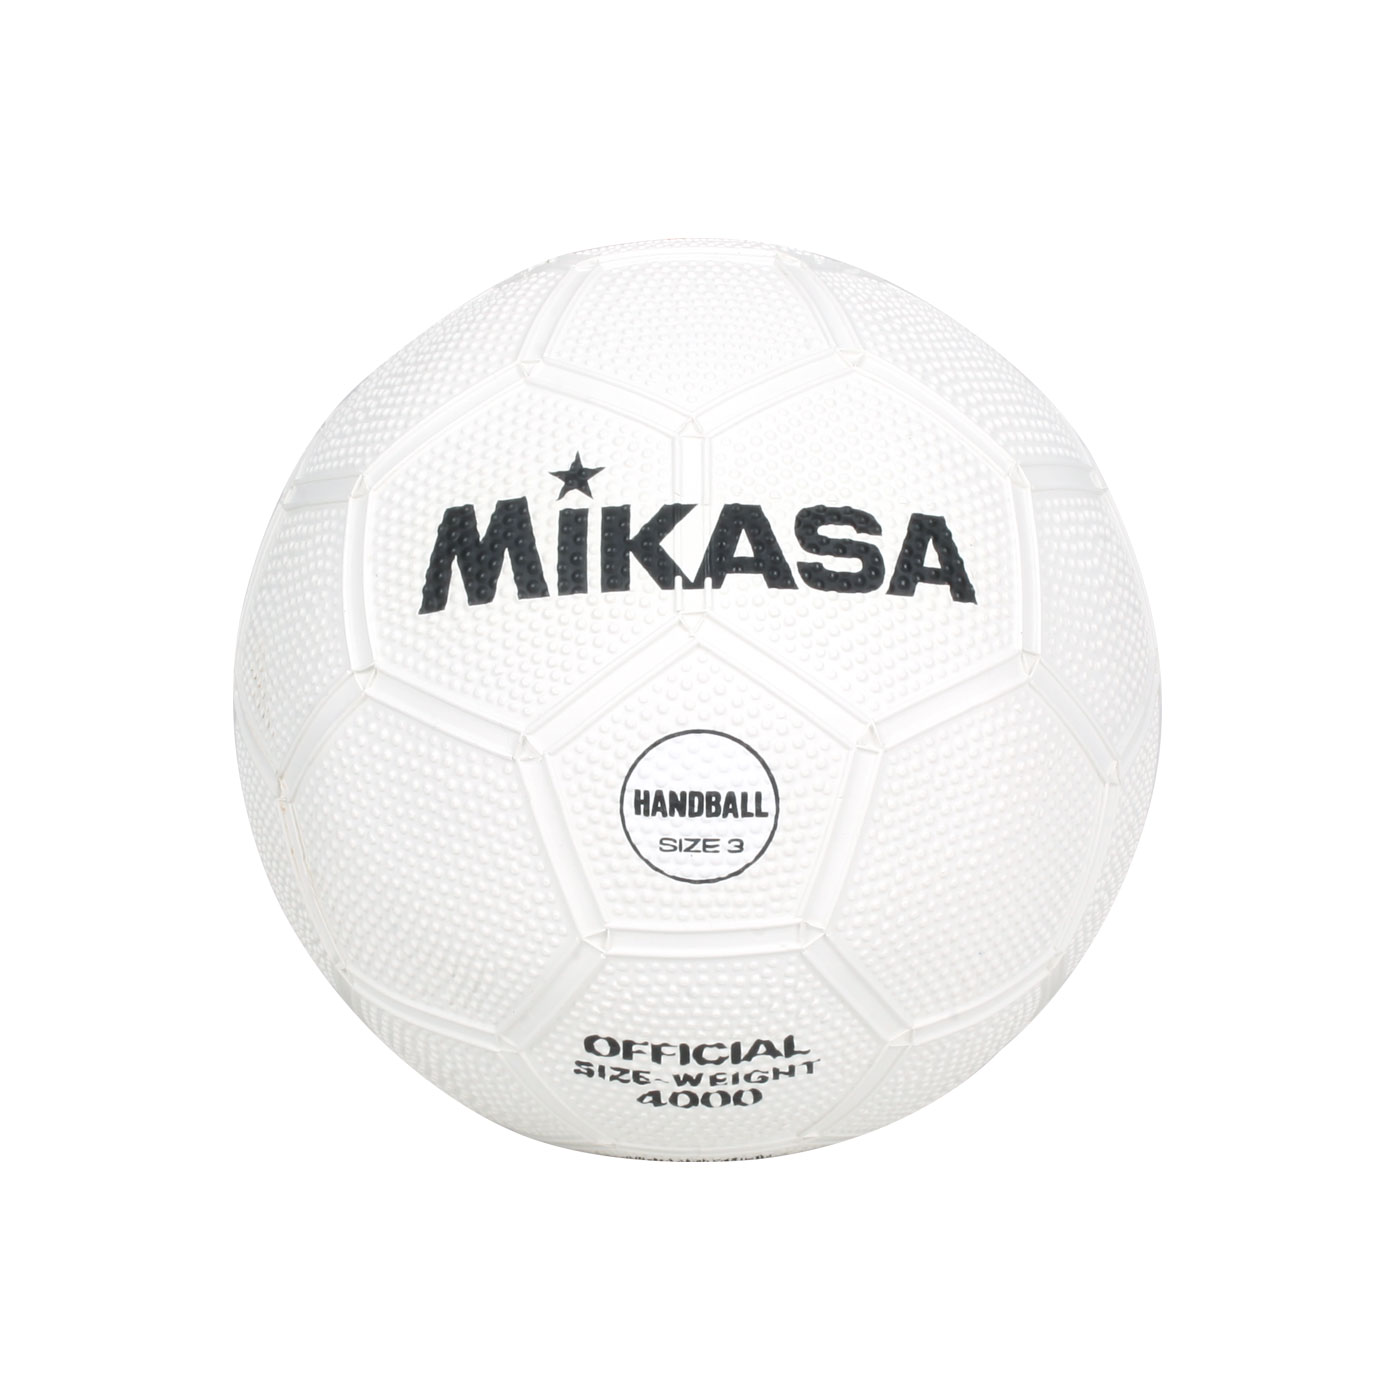 MIKASA 橡膠製手球#3 MK4000-W - 白